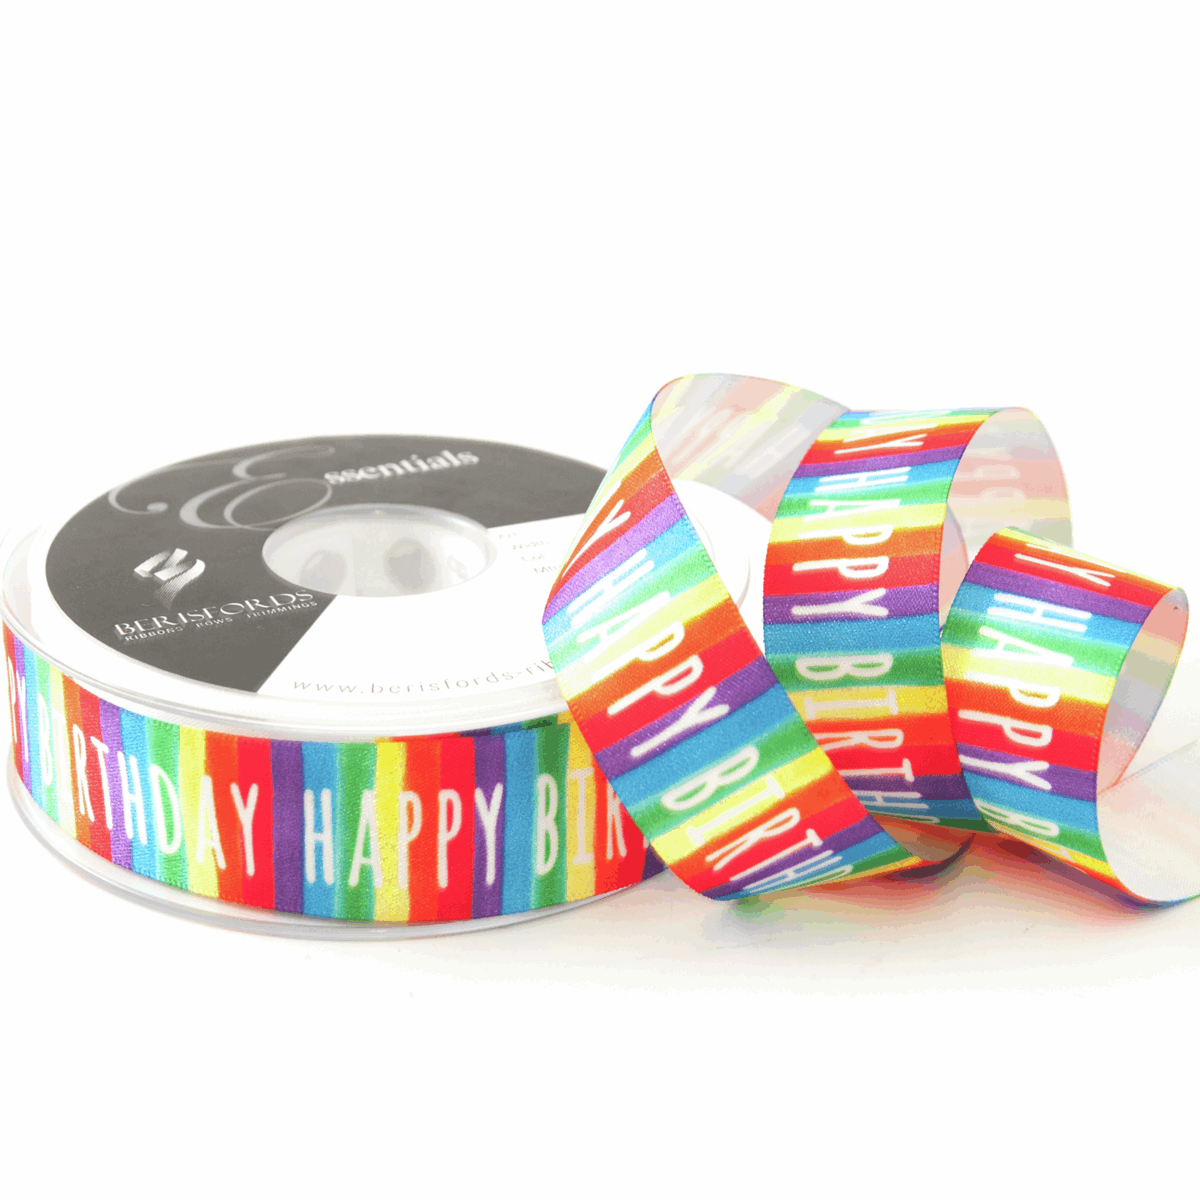 3 Creative uses for rainbow ribbon - Berisfords Ribbons